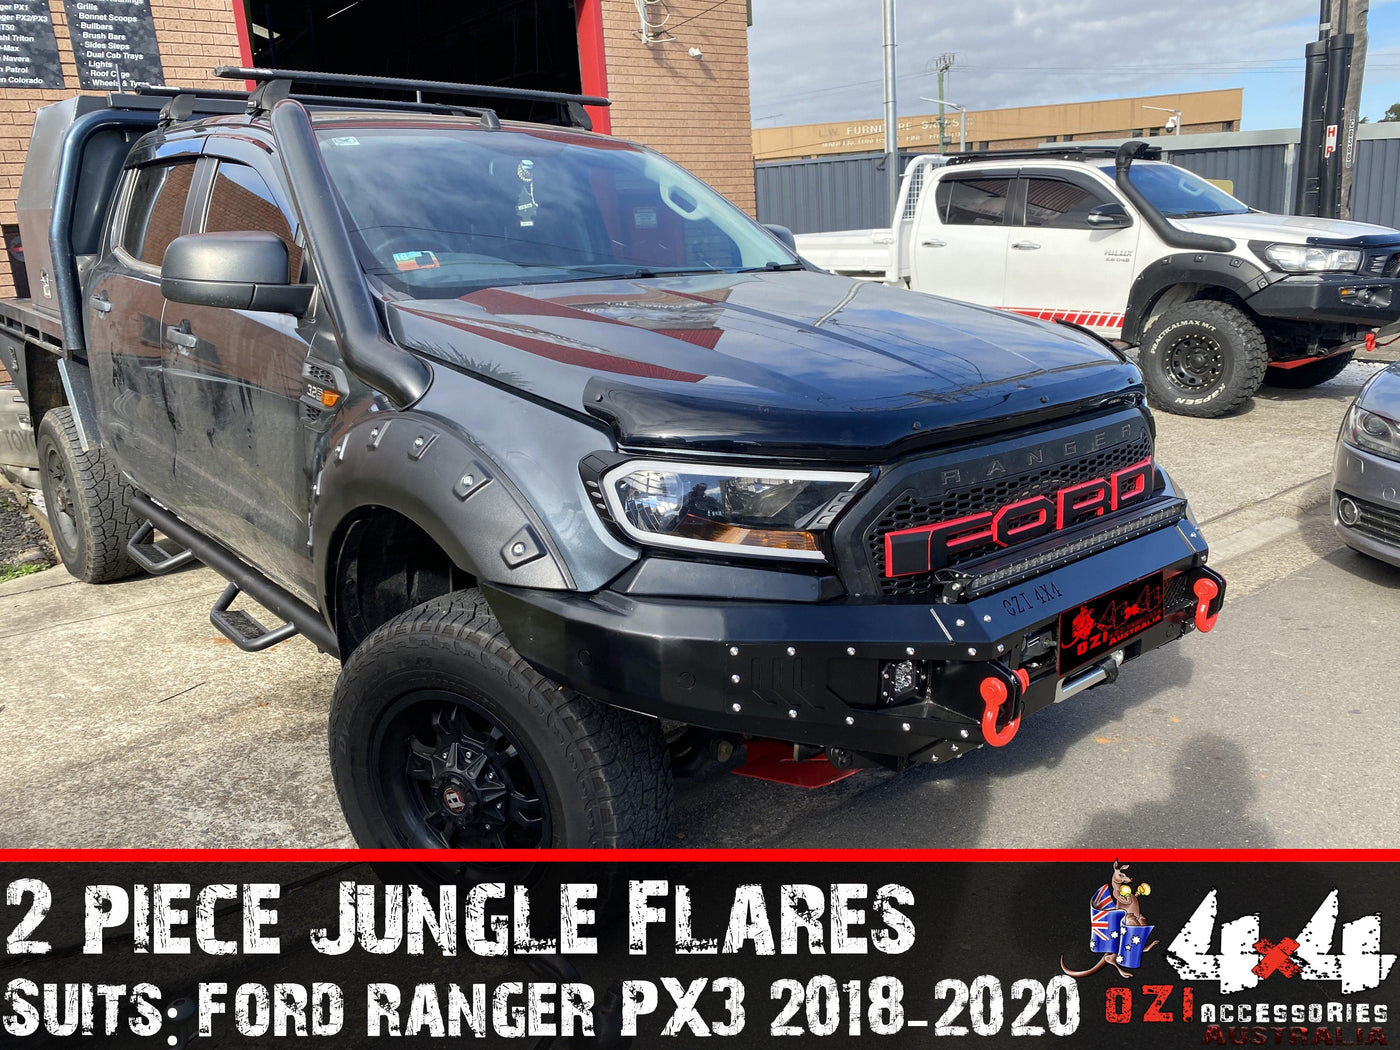 2 pcs. Front Jugle Flares Suits Ford Ranger PX3 2018-2020